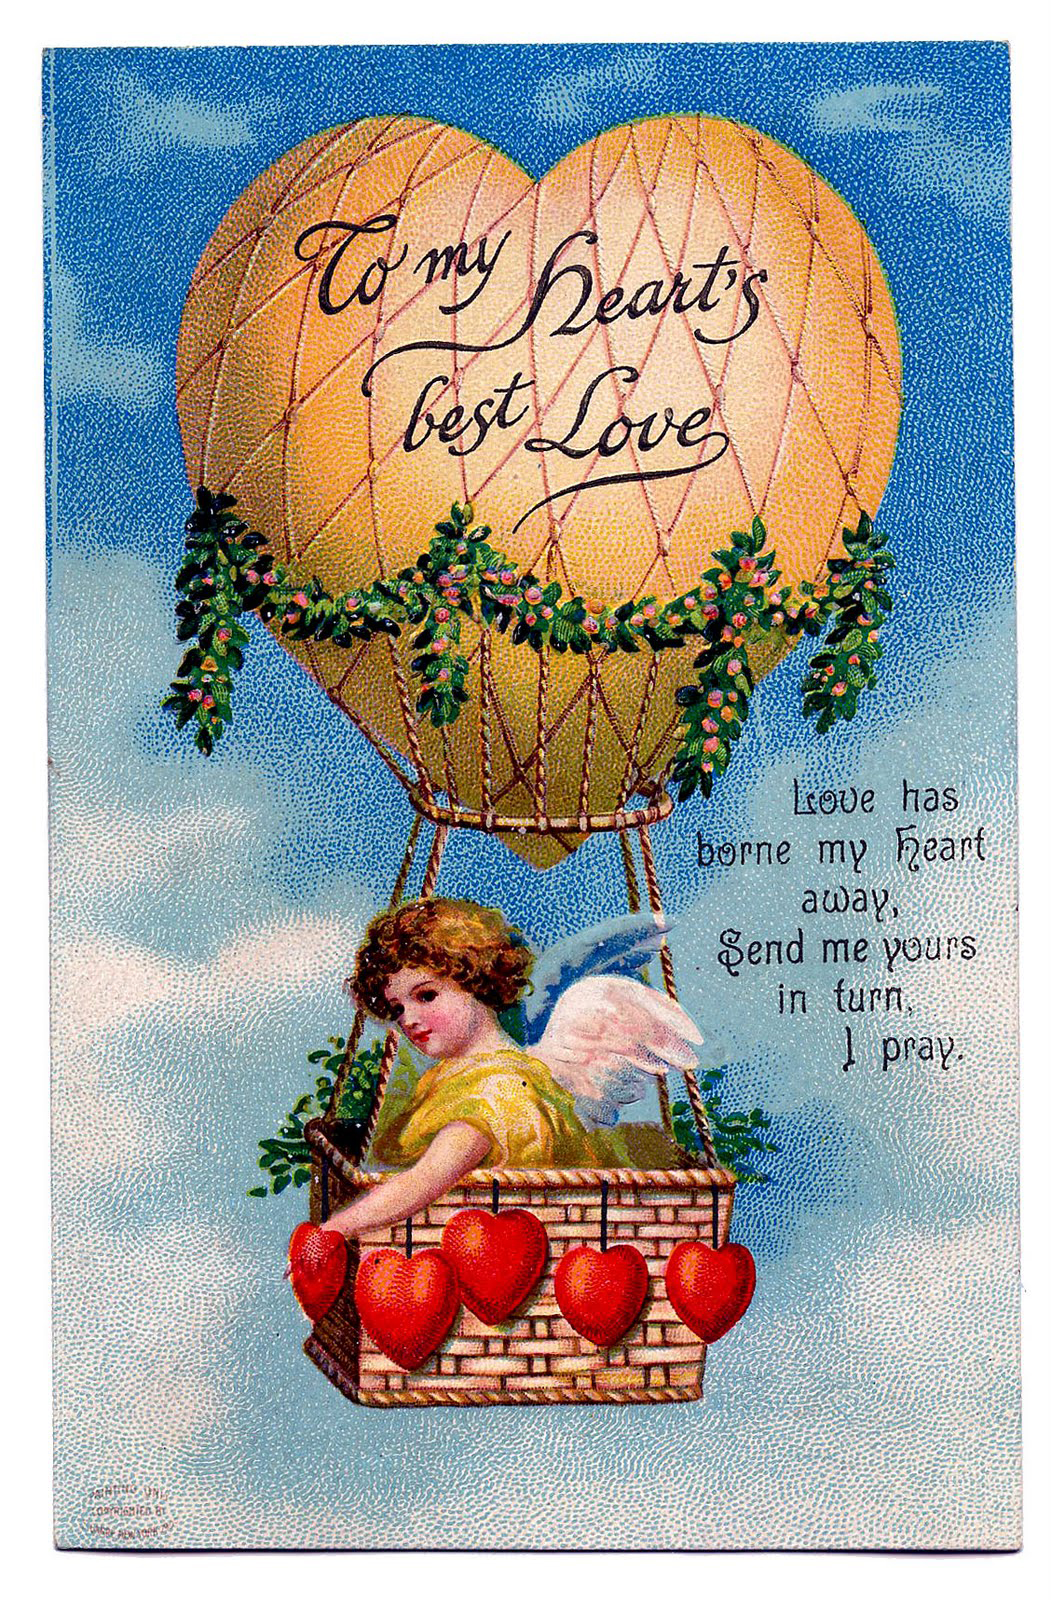 Vintage Valentine cherub hearts antique illustrations set of 8 scrap booking 